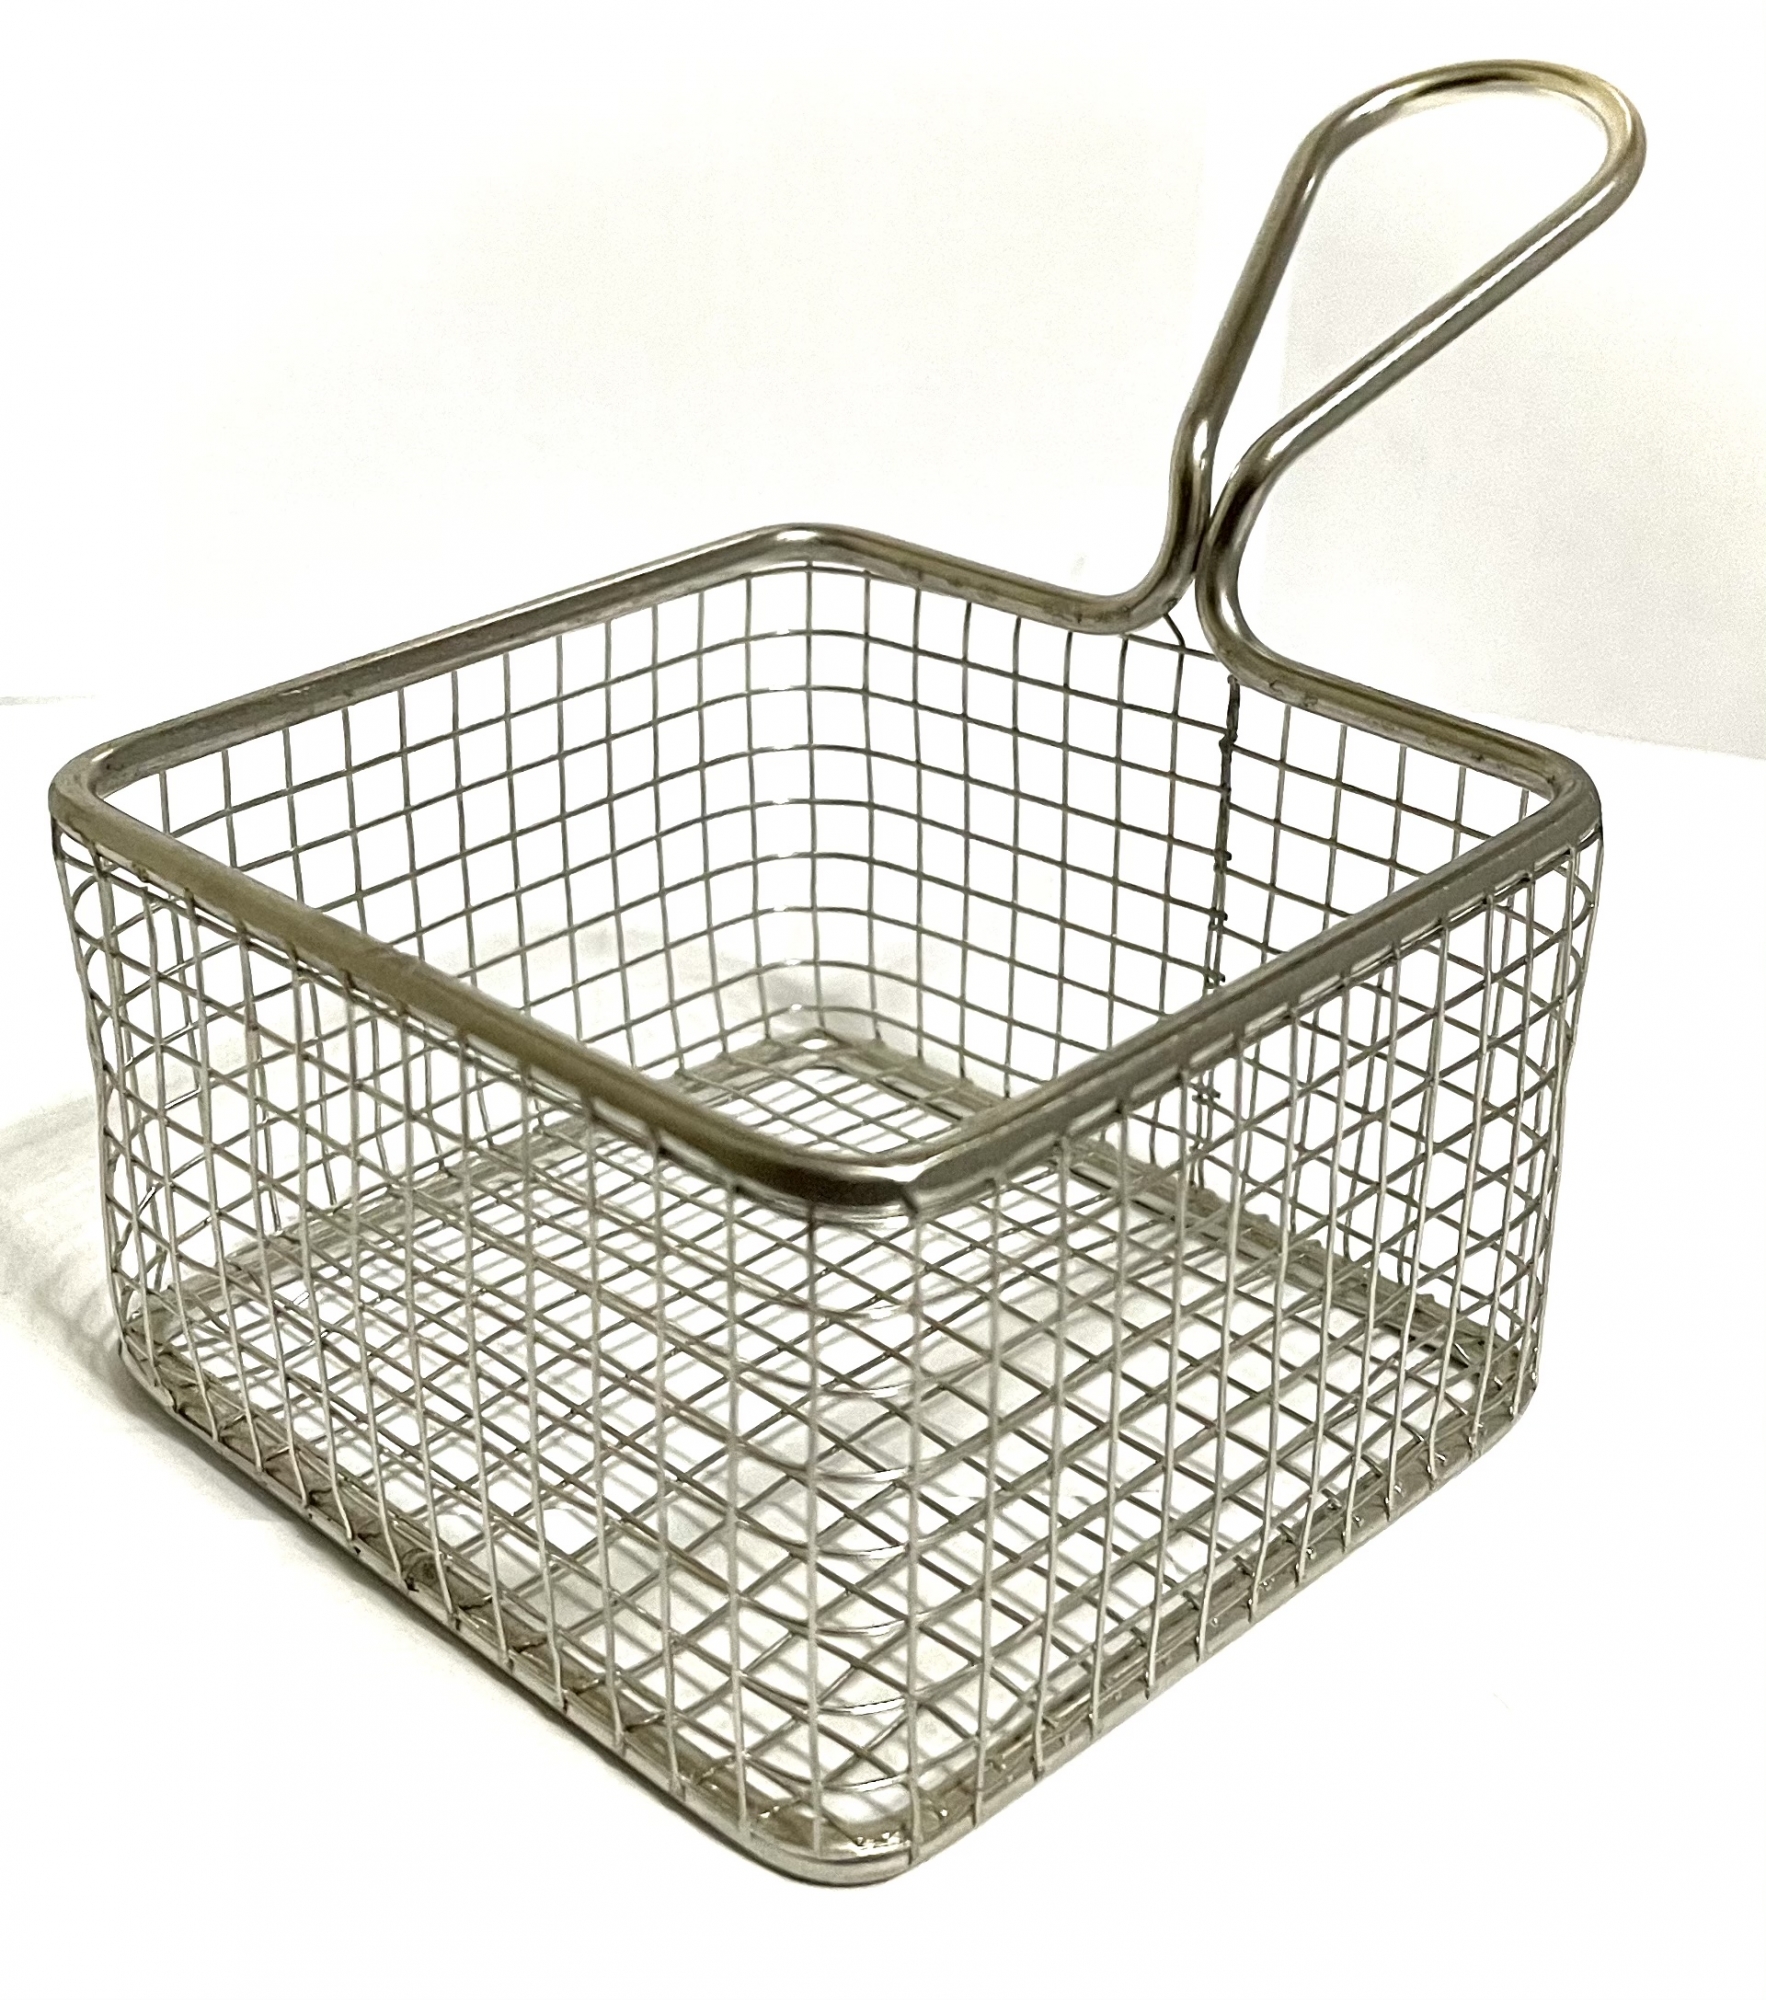 Household storage baskets